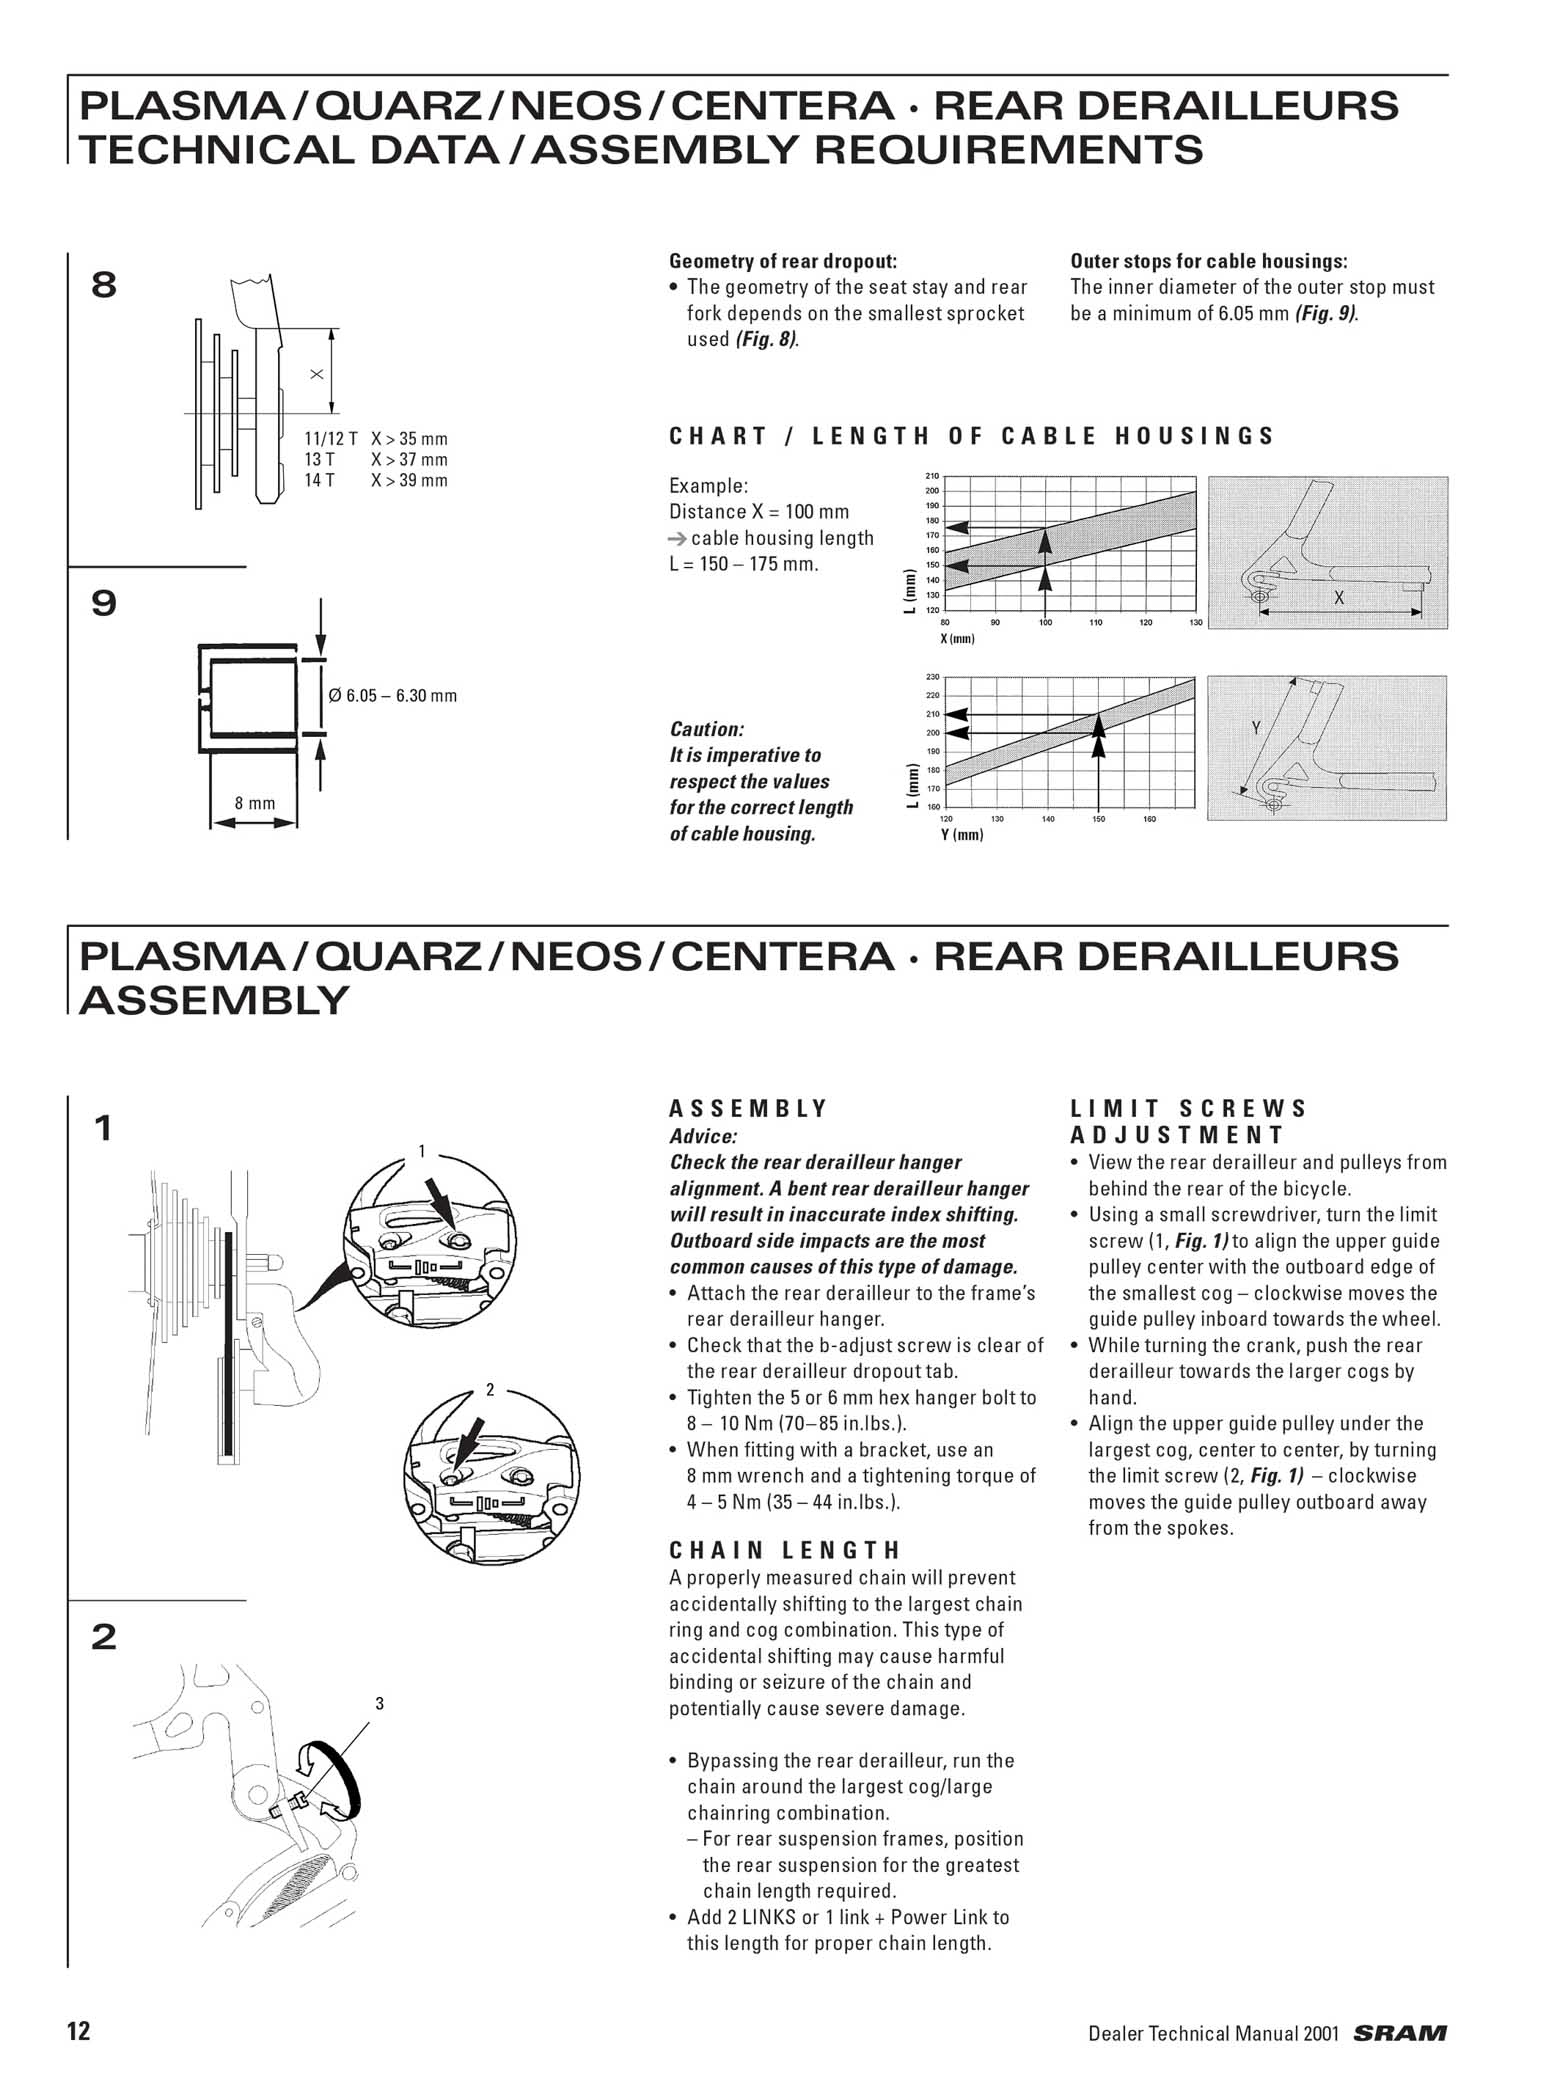 SRAM Dealer Technical Manual 2001 page 012 main image